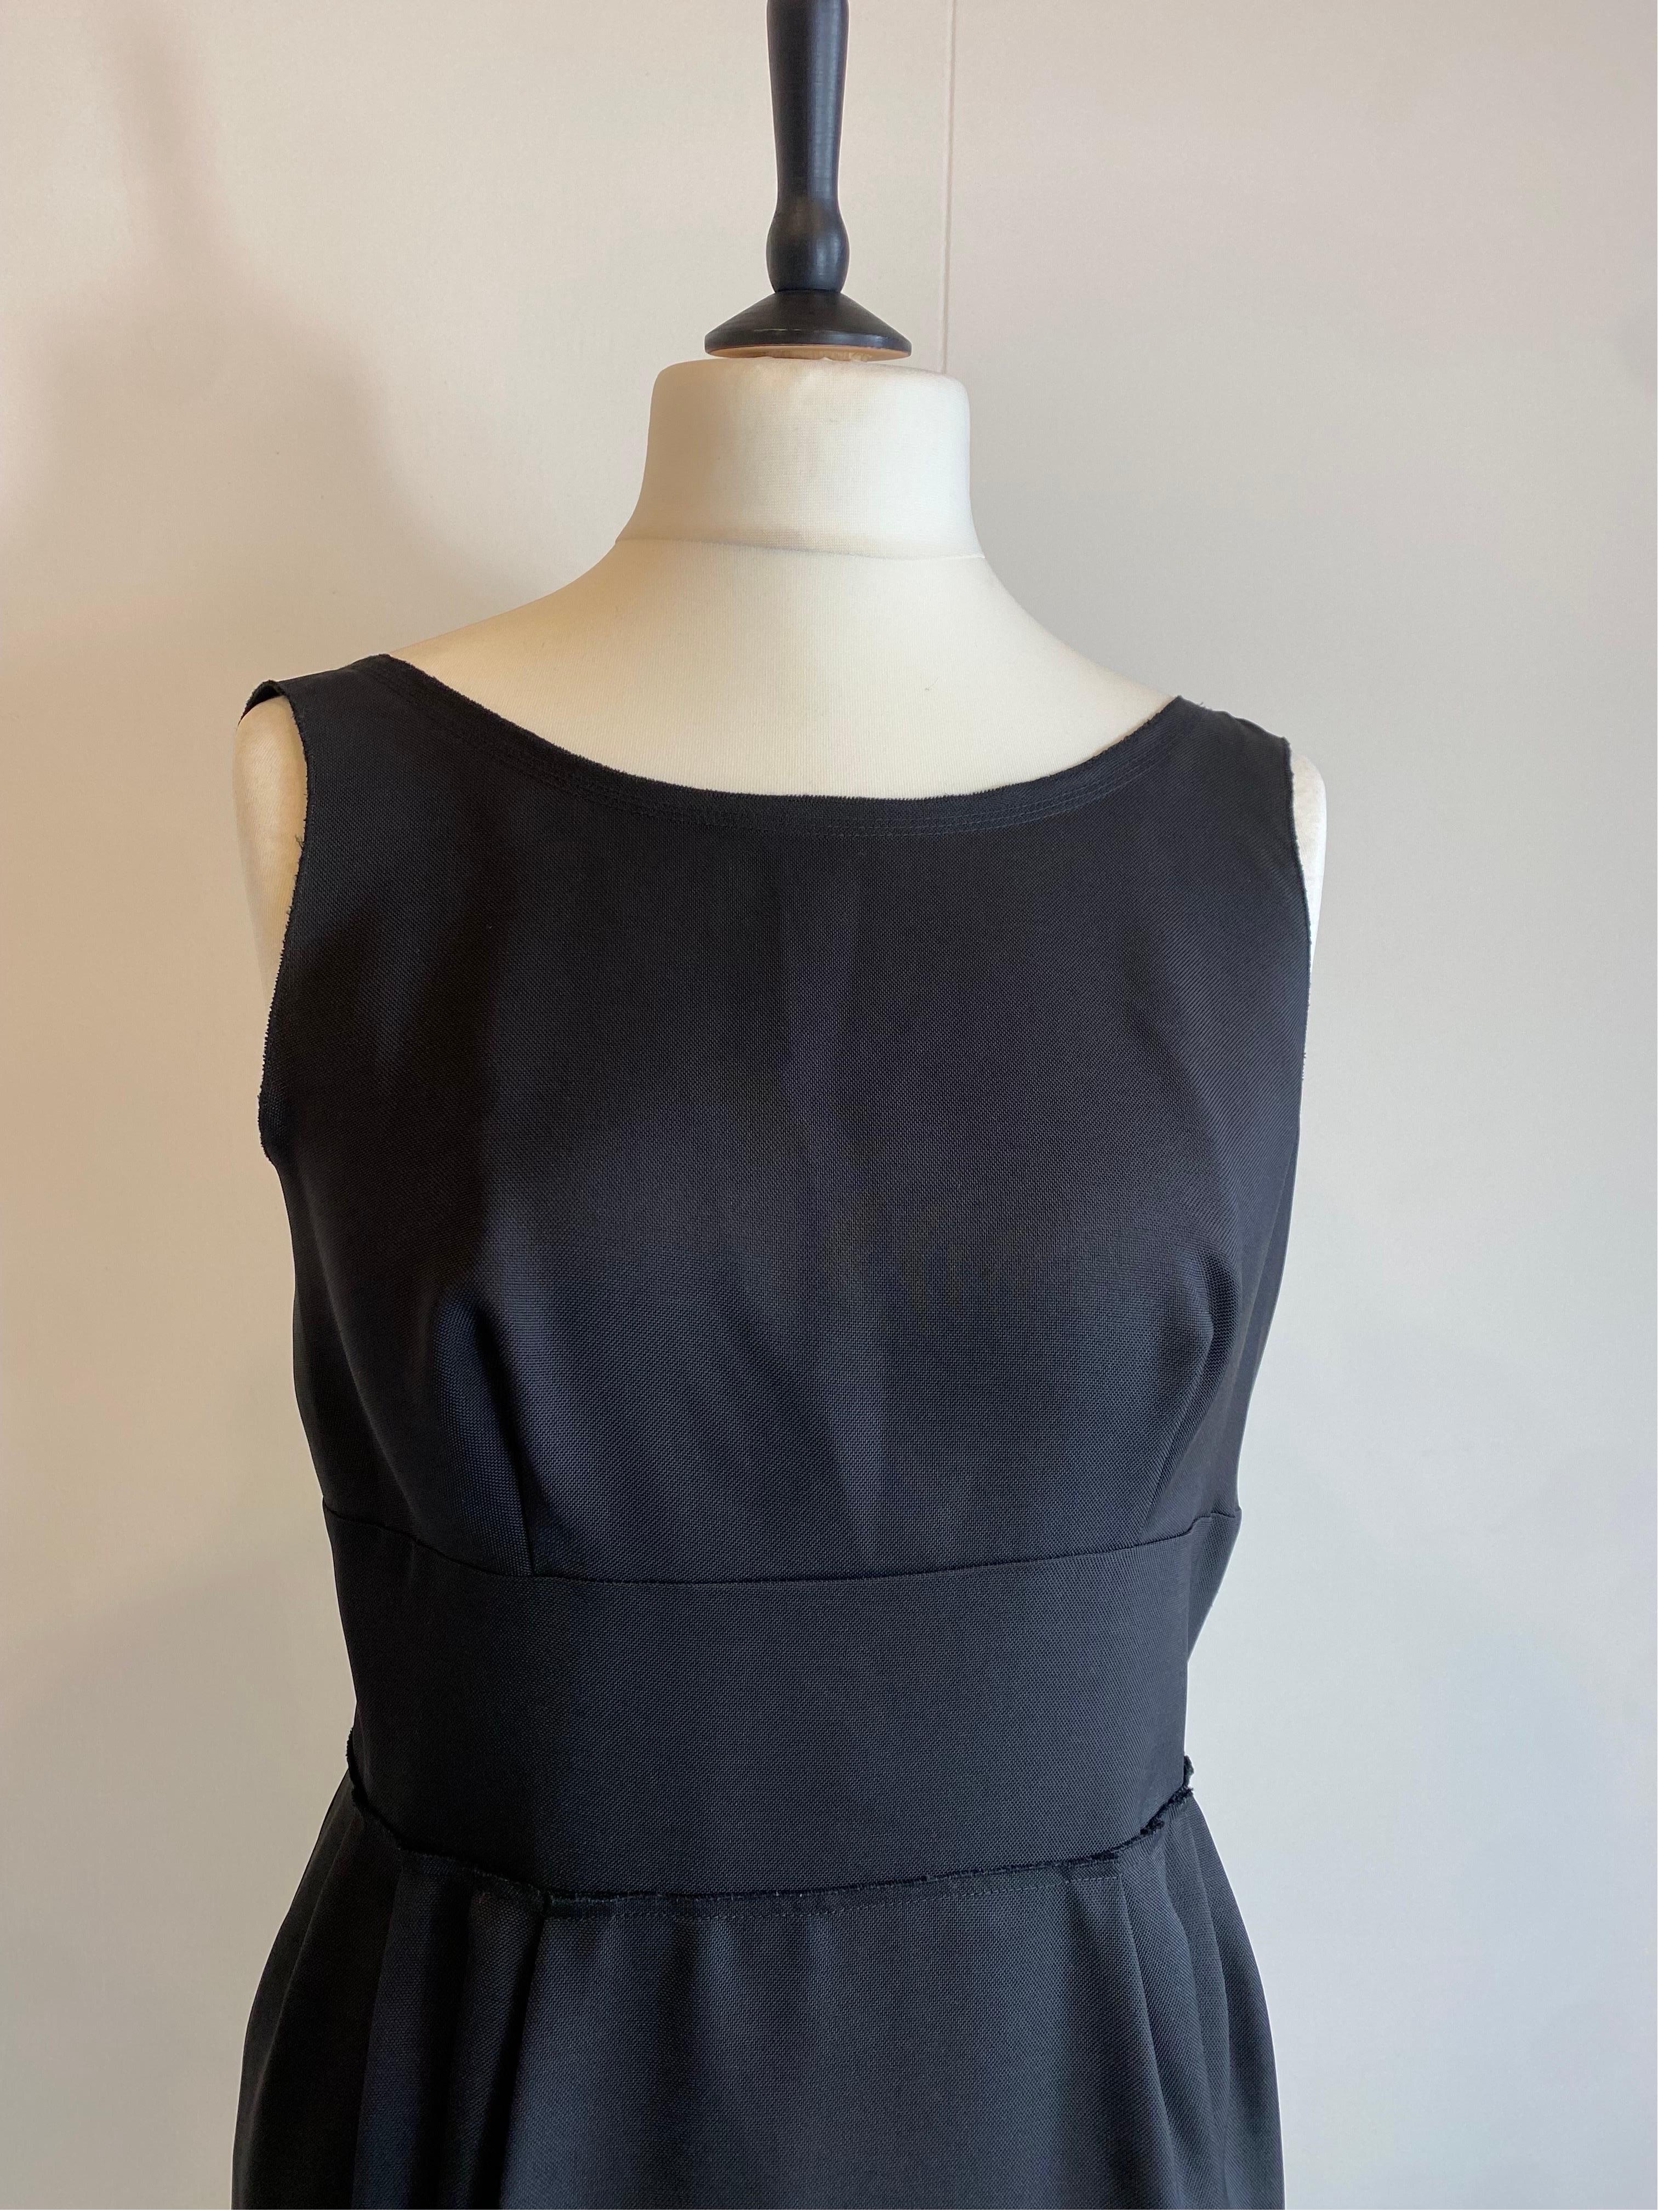 Prada elegant black Sheath Dress In Excellent Condition For Sale In Carnate, IT